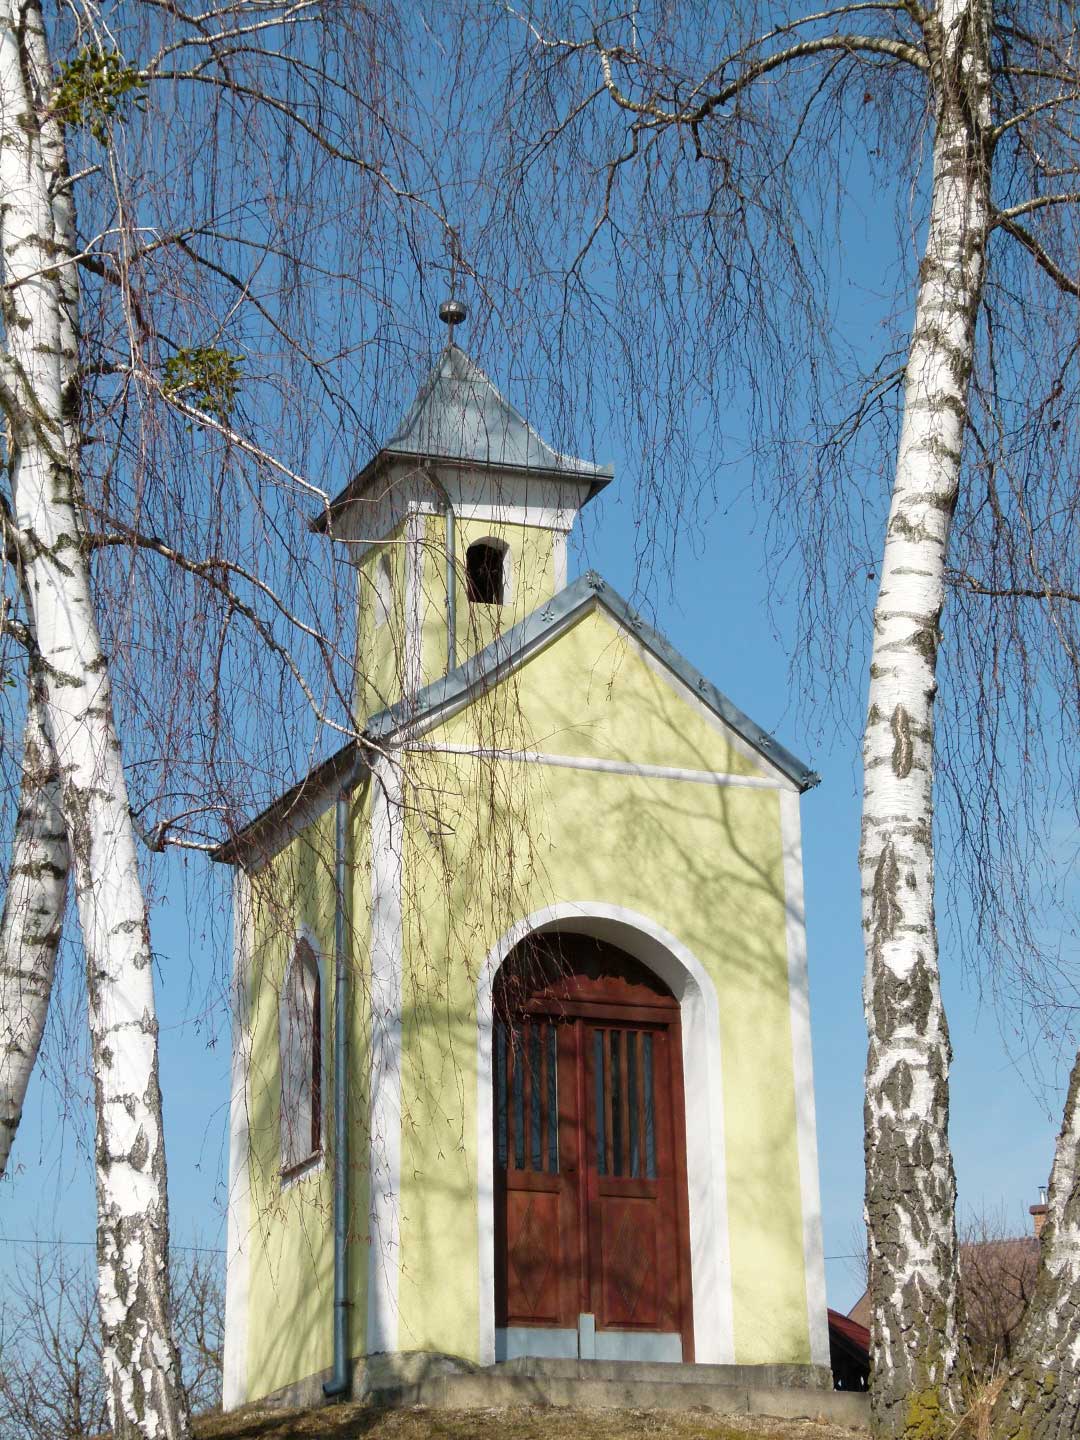 Krmekova kapela, kapelica zaprtega tipa, v Štajngrovi